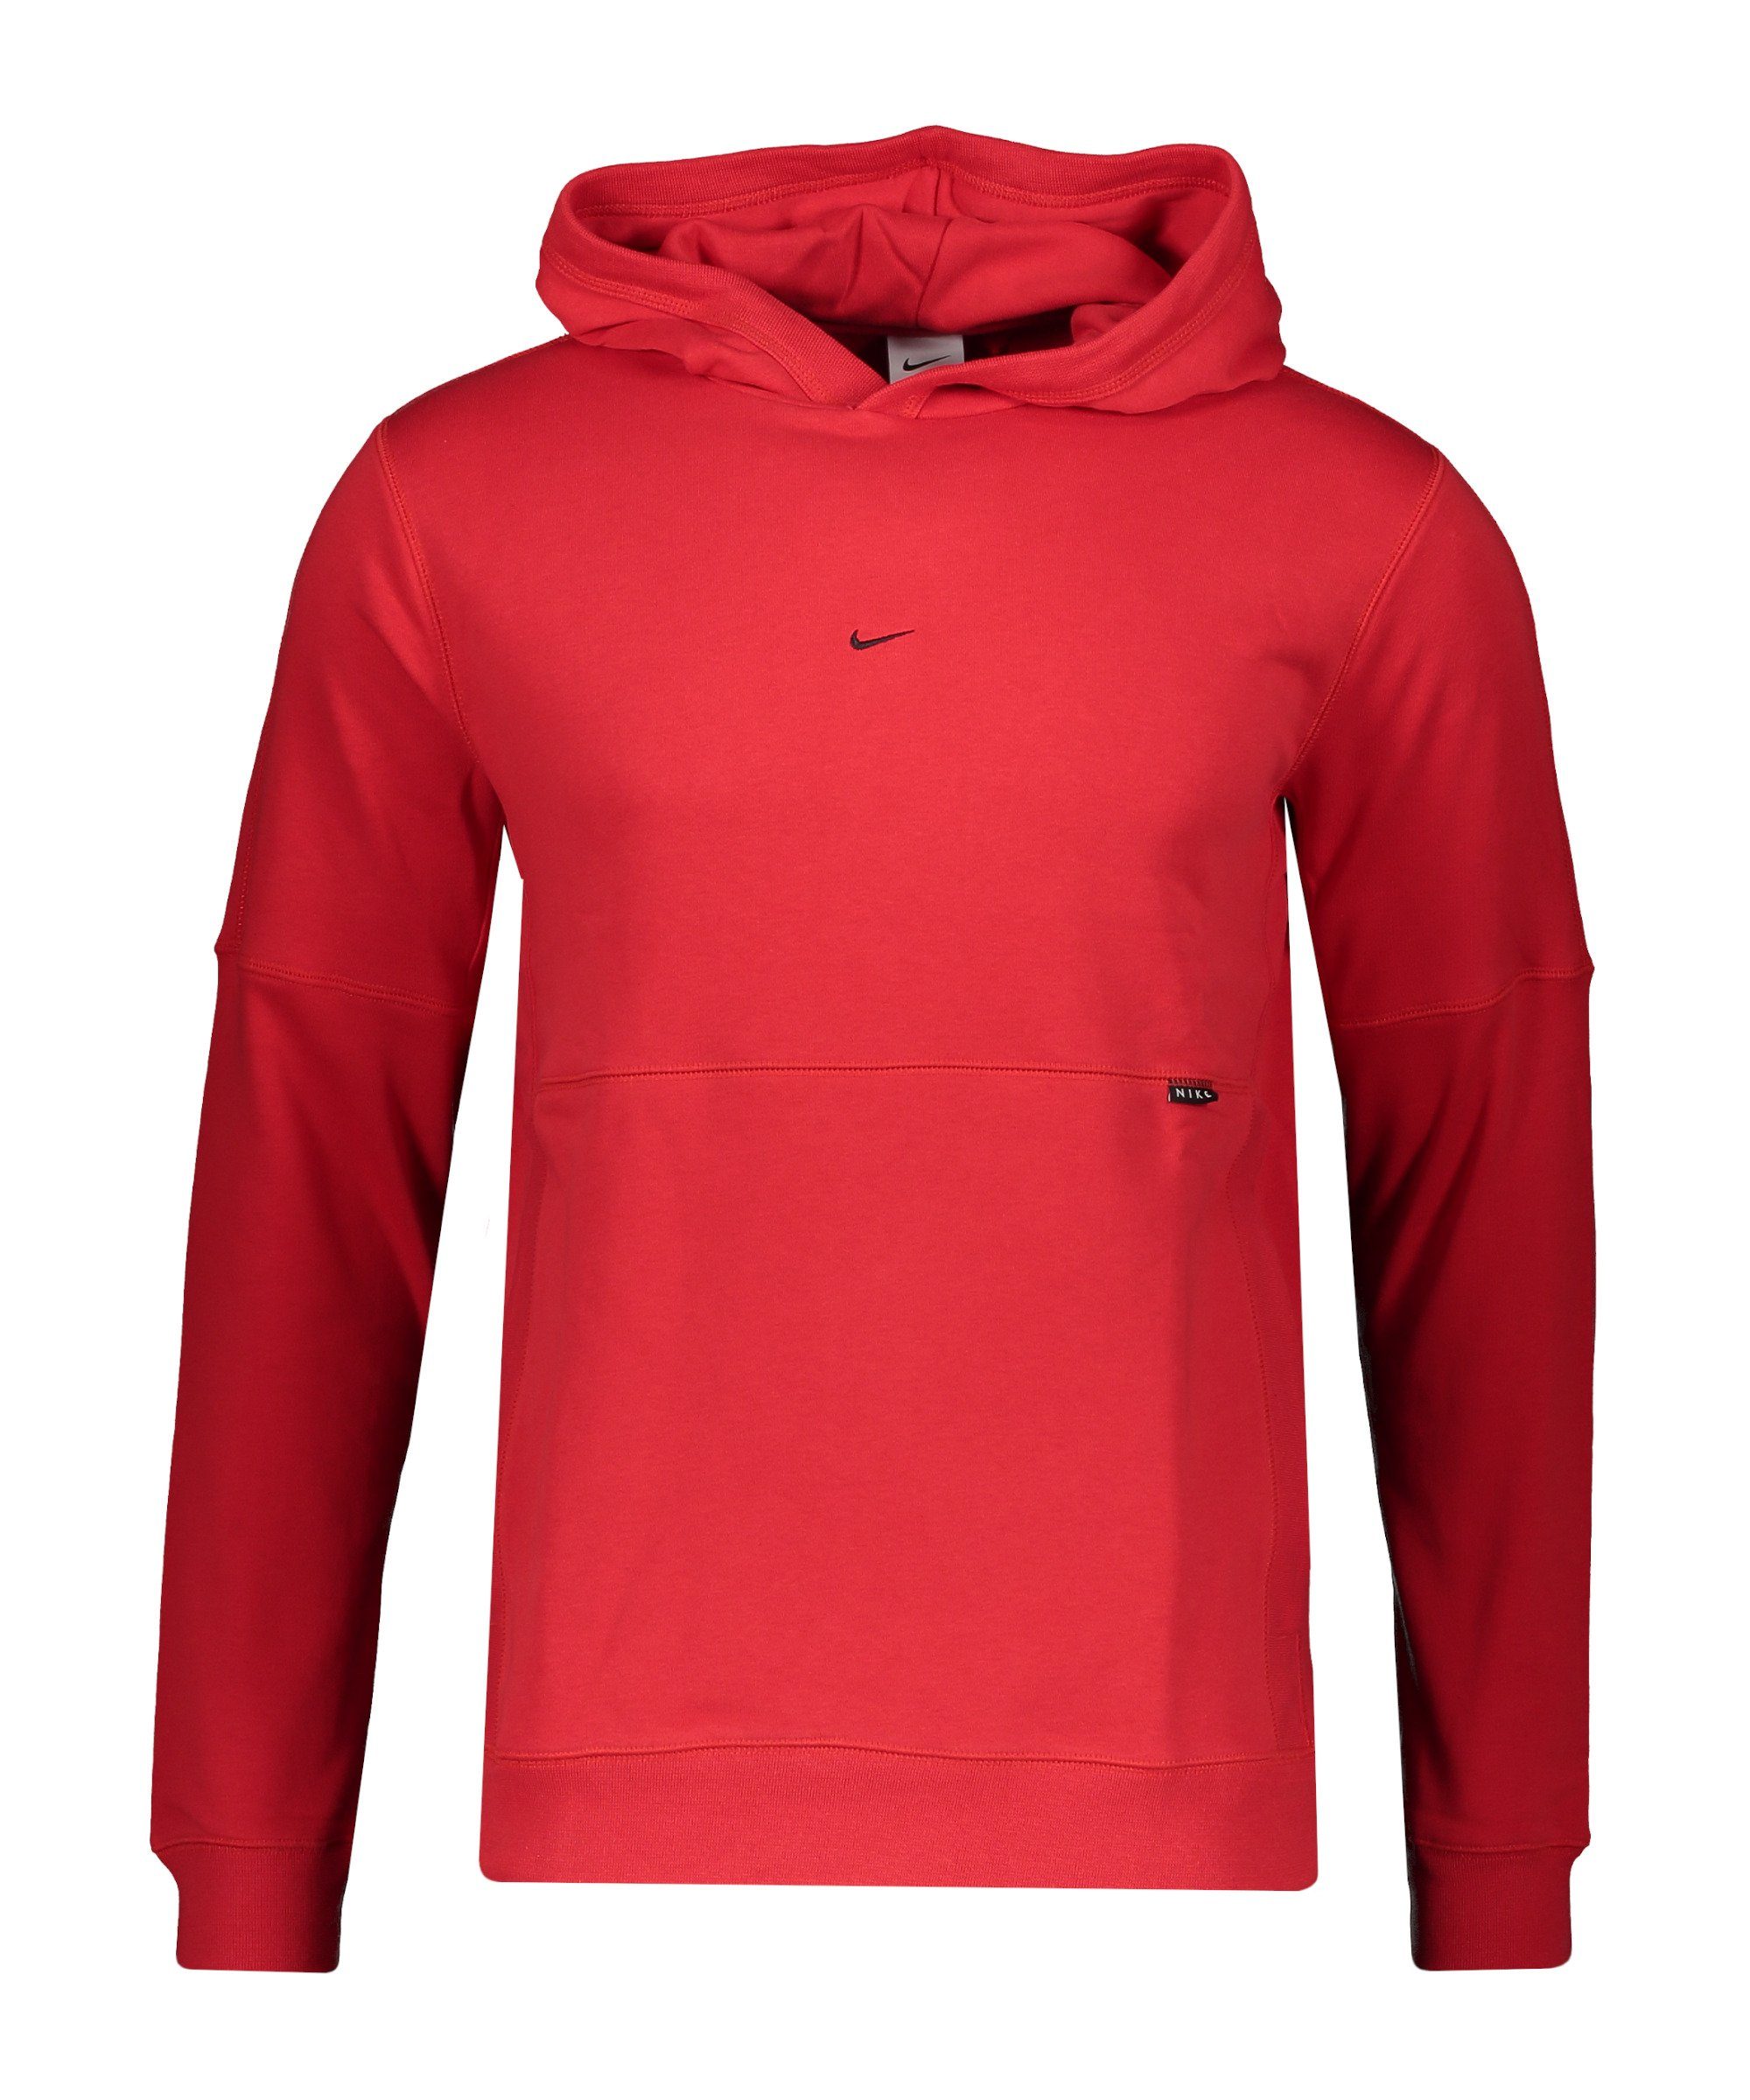 Nike | Herren OTTO kaufen online Rosa Sweatshirts